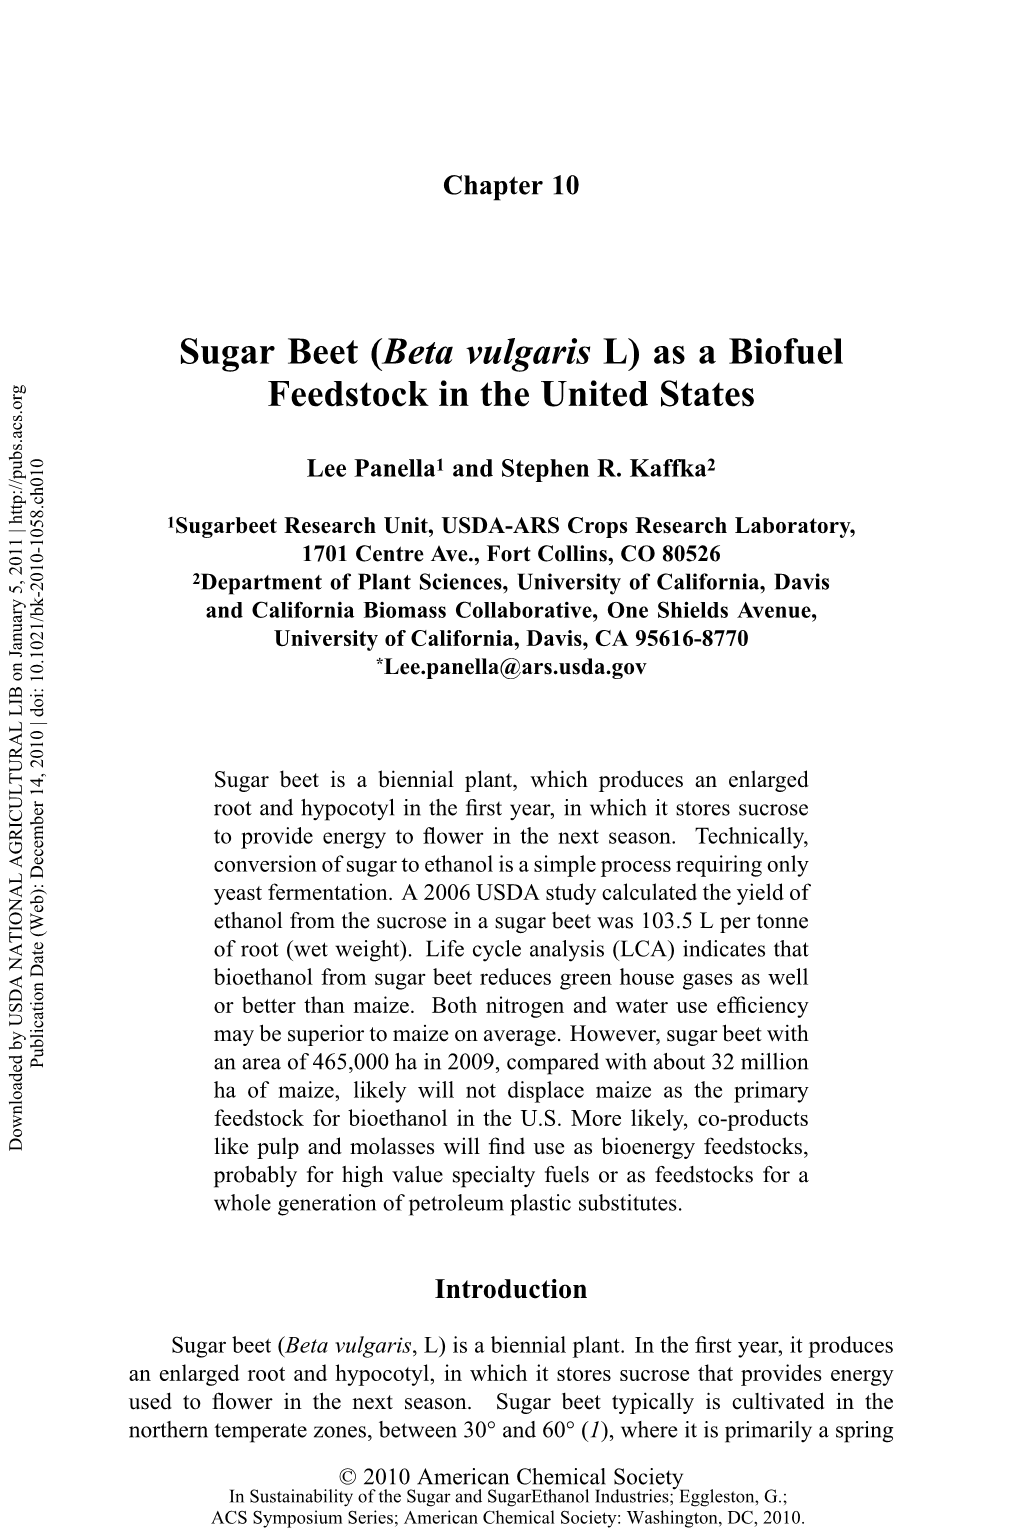 Sugar Beet (Beta Vulgaris L) As a Biofuel Feedstock in the United States